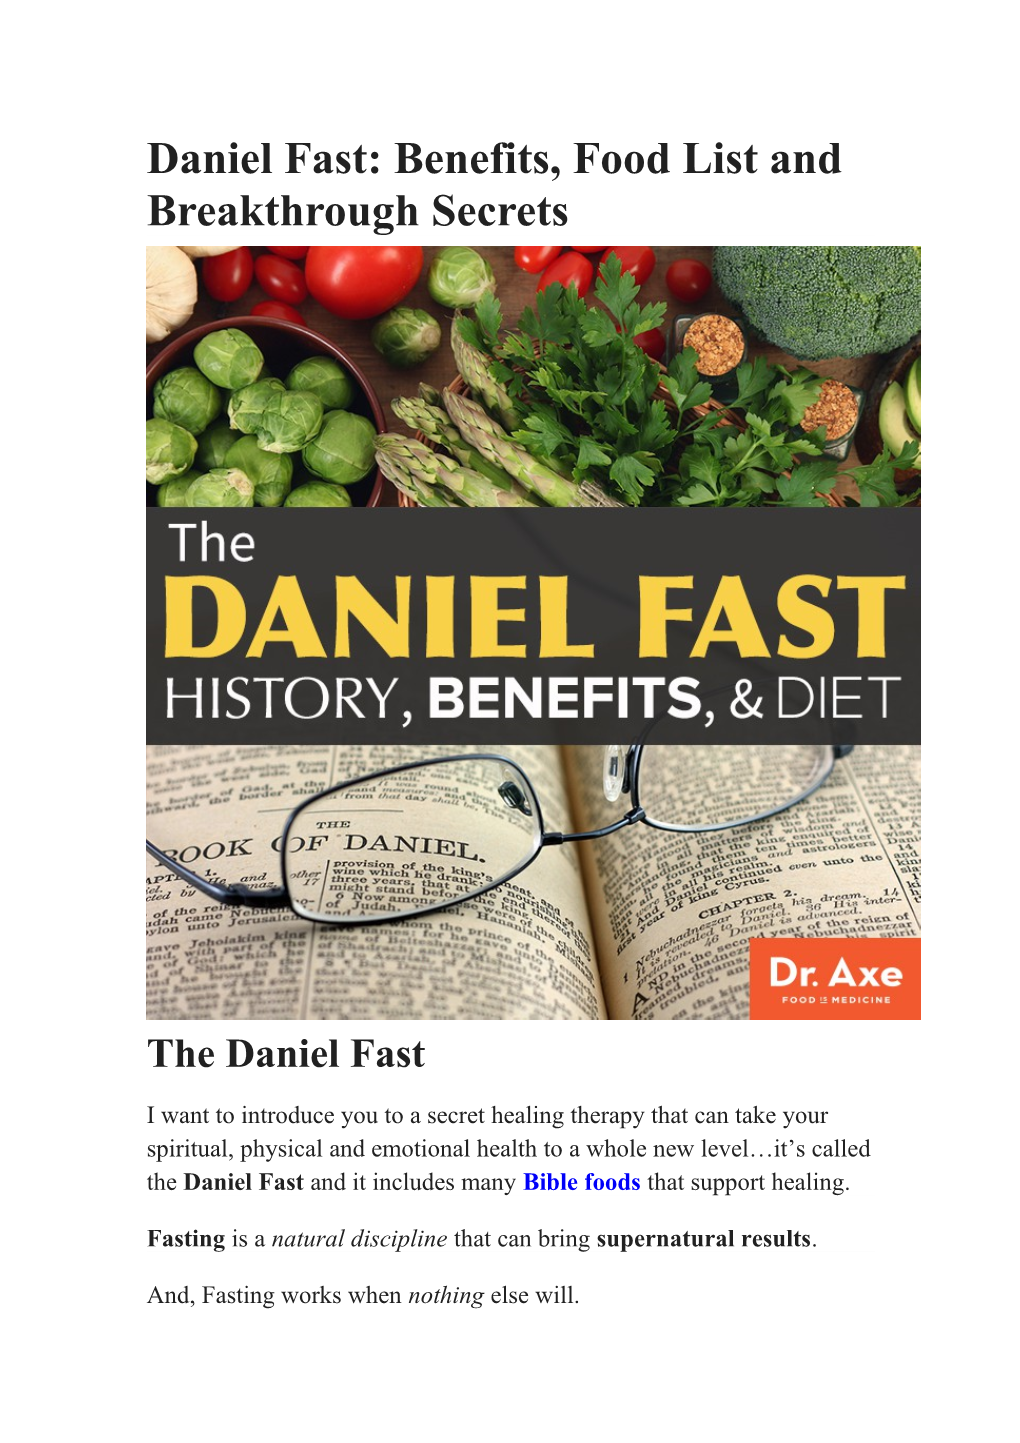 Daniel Fast: Benefits, Food List and Breakthrough Secrets